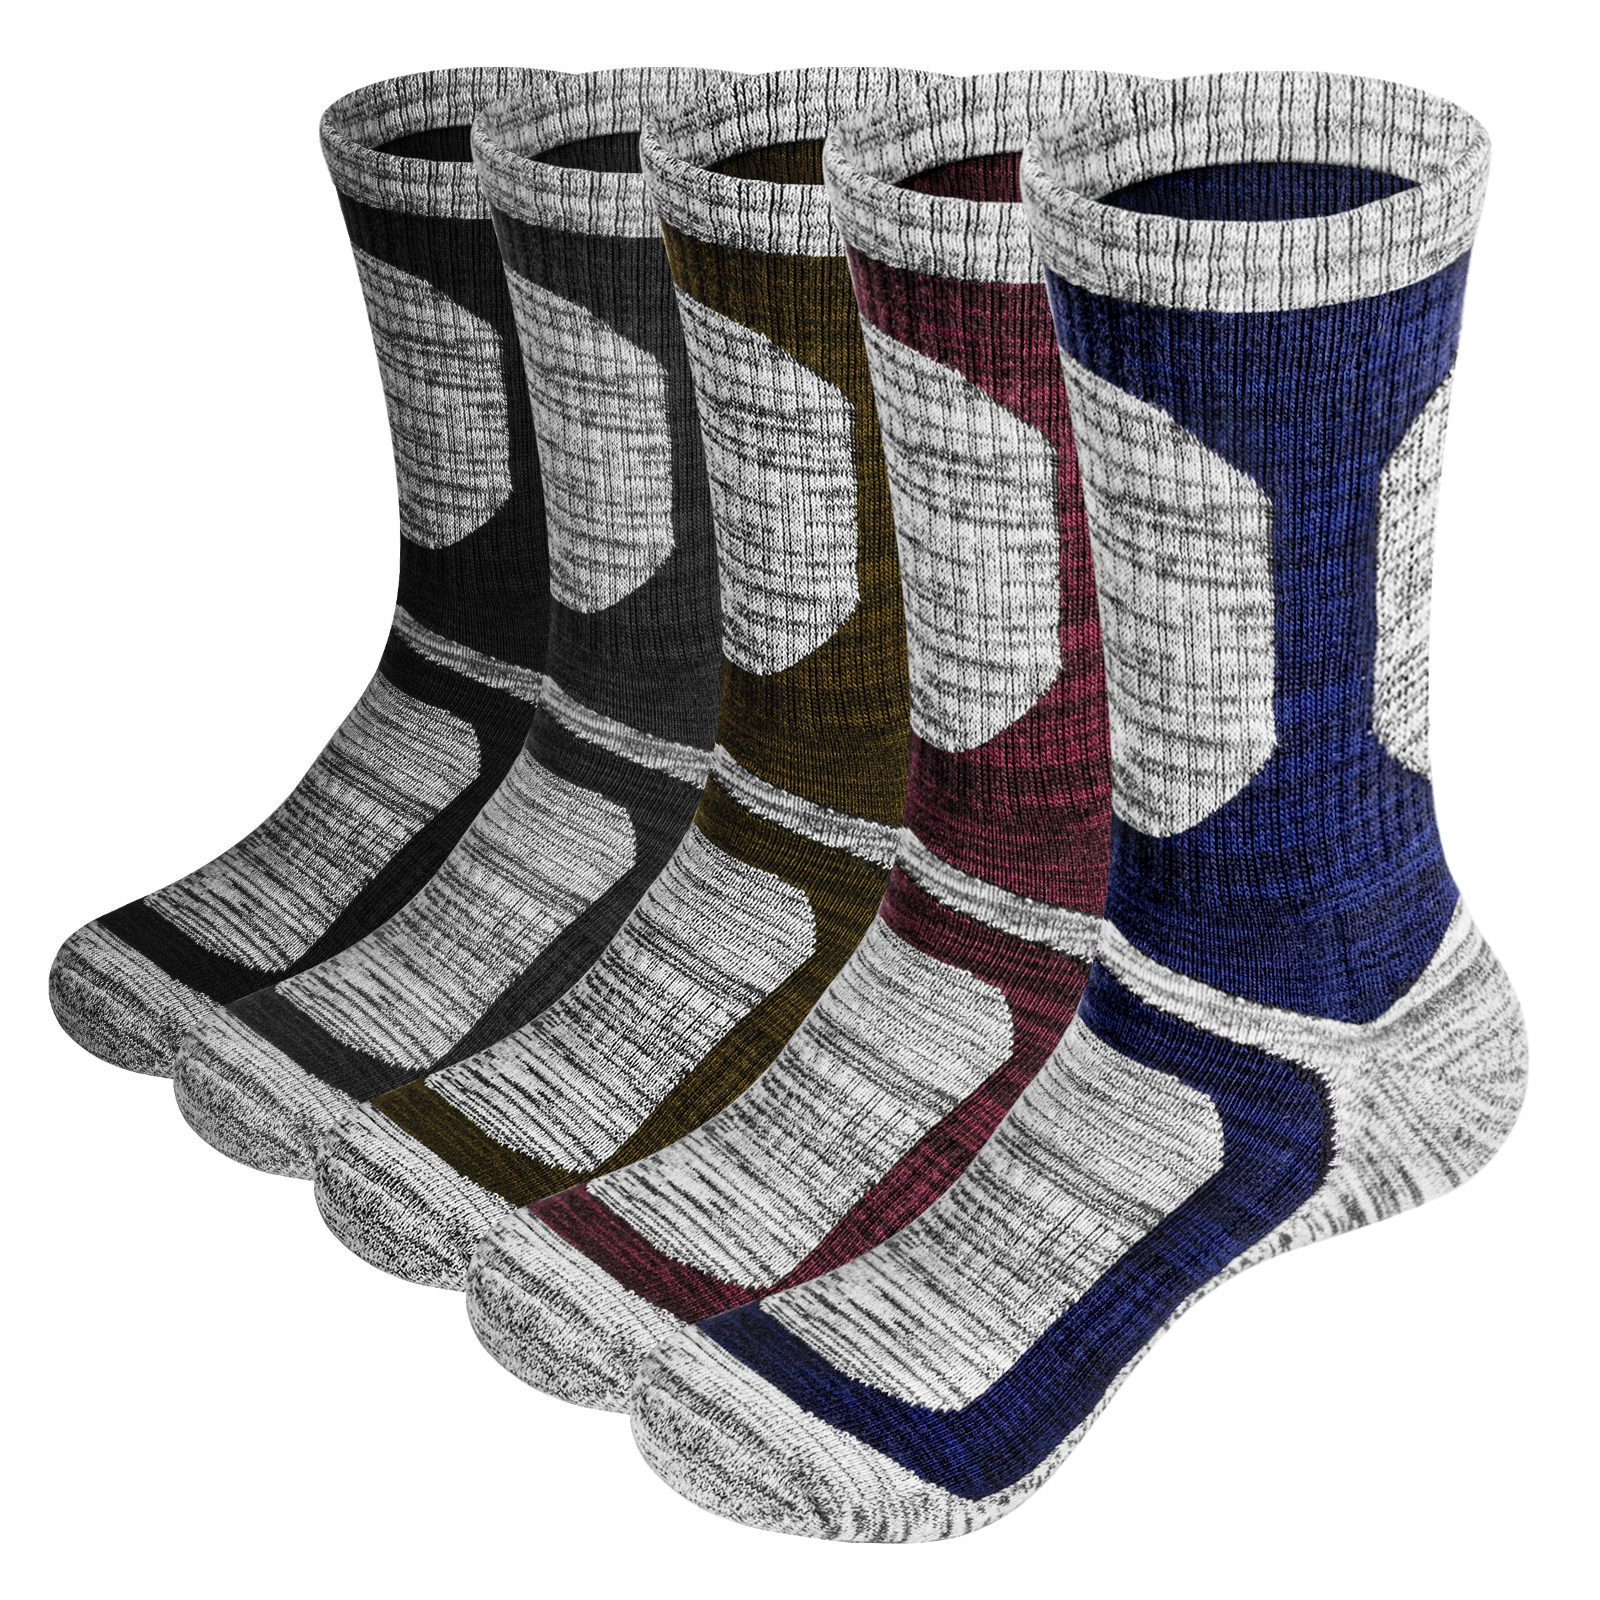 5PM2117 Men's Hiking Walking Socks Cushion Crew Athletic Gym Sports Socks Thick Thermal Cotton Socks